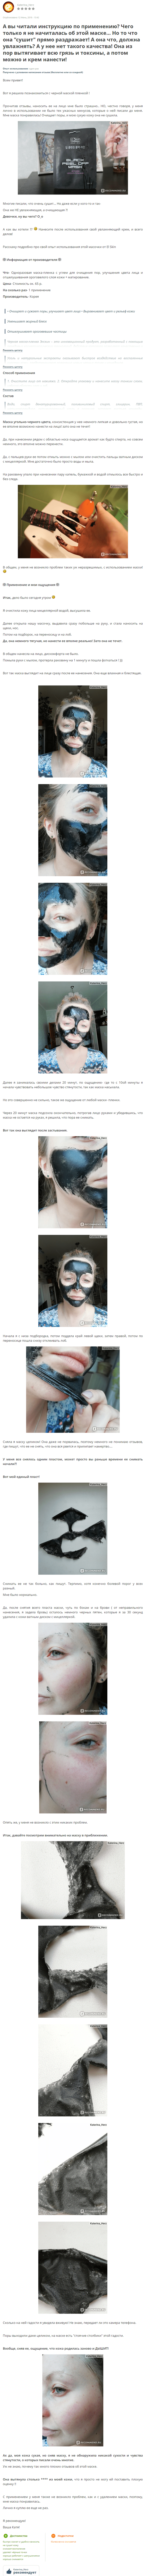 El'Skin Black peel off mask (черная маска пленка) - отзыв 1-min (1)